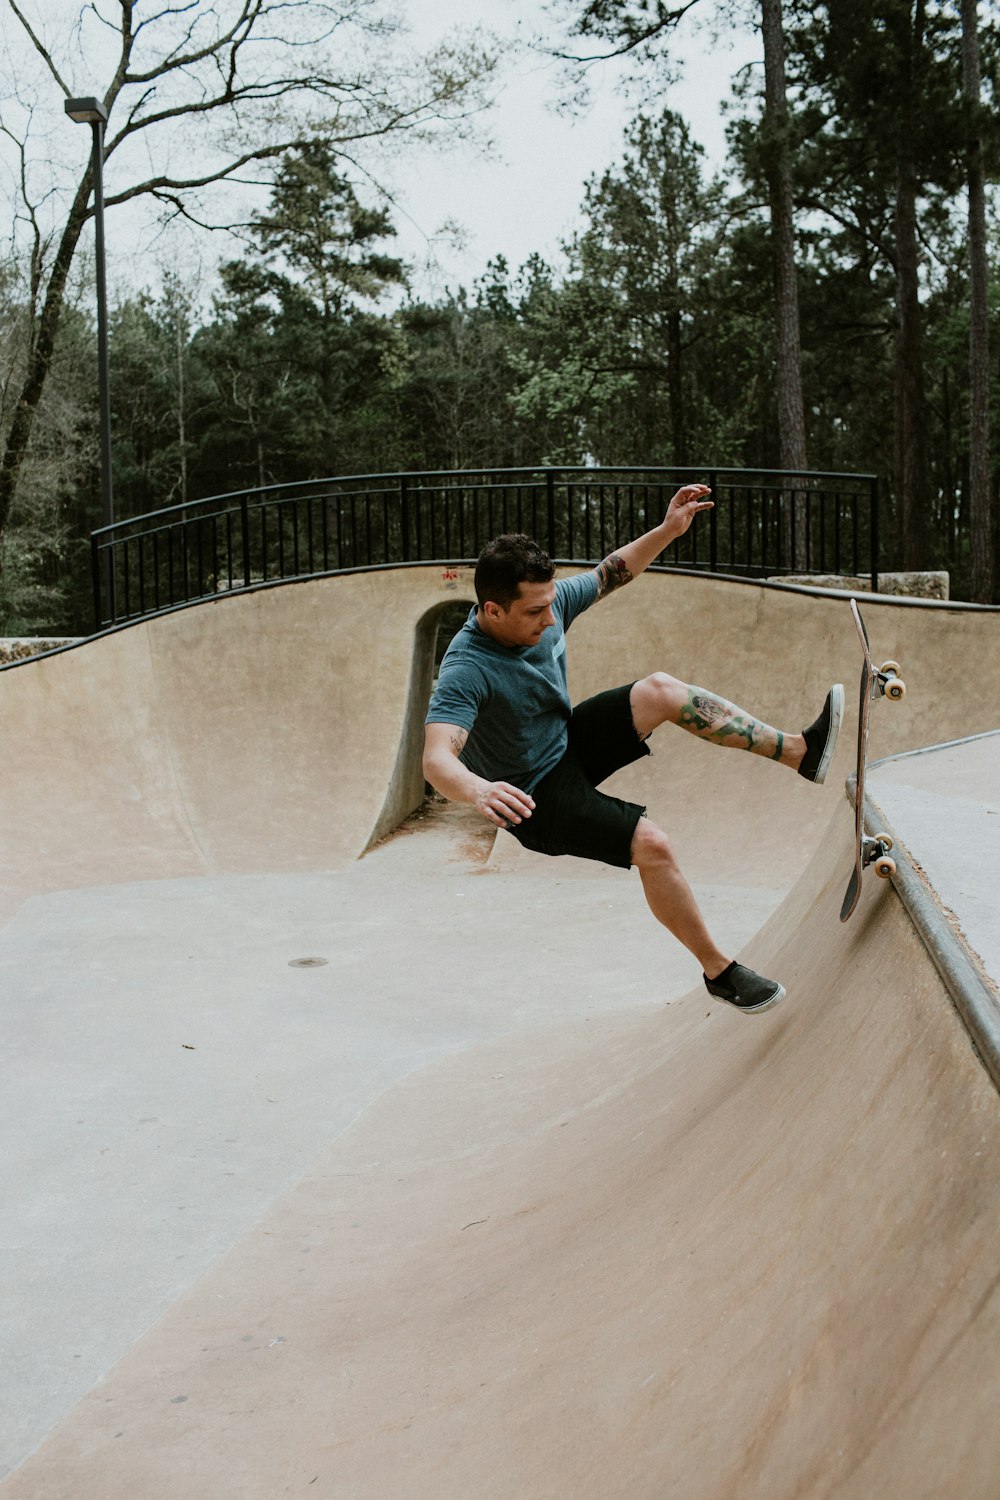 man playing skateboard on skateboard ramp